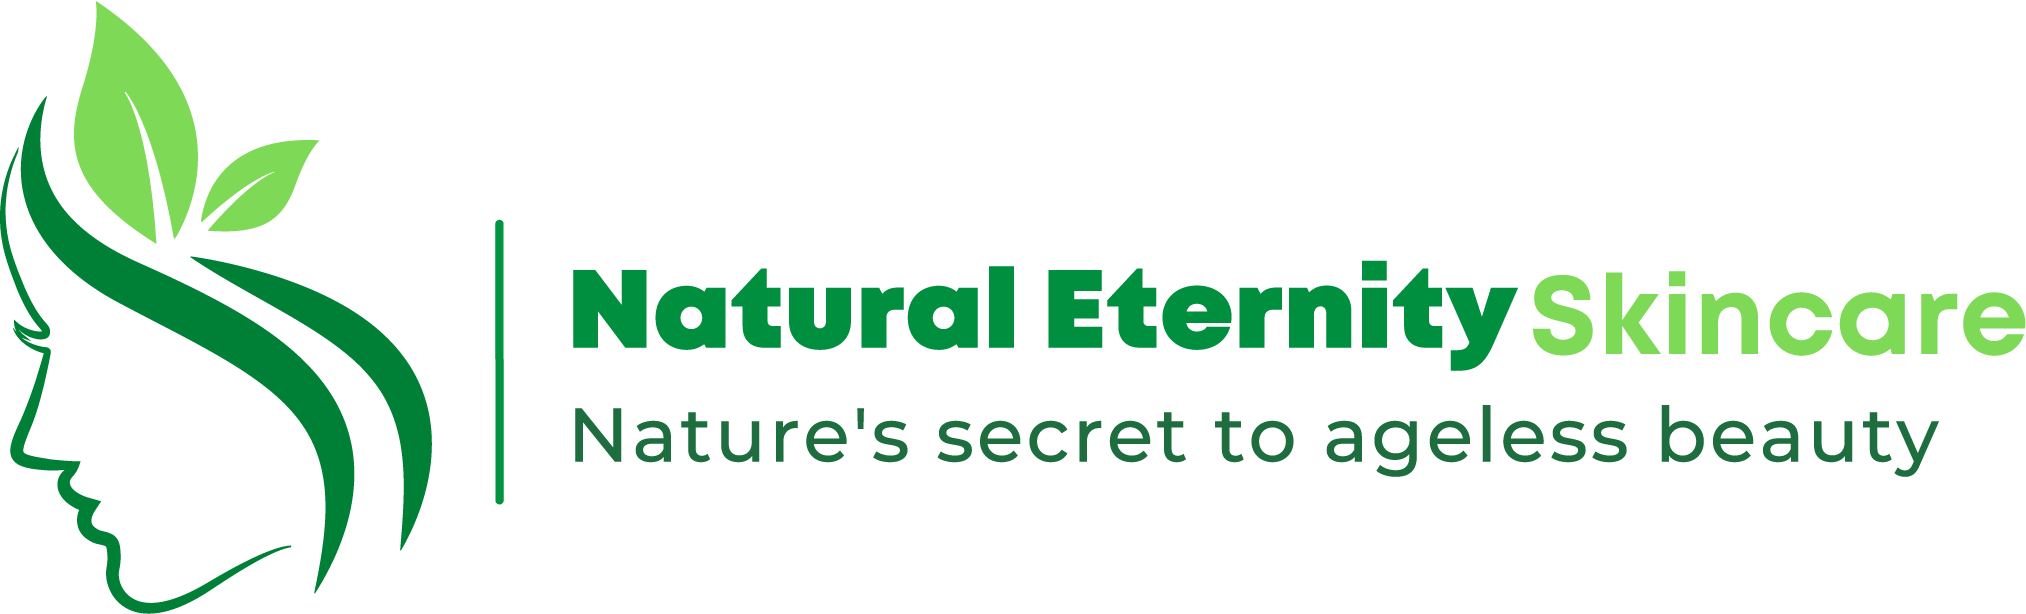 Natural Eternity Skincare